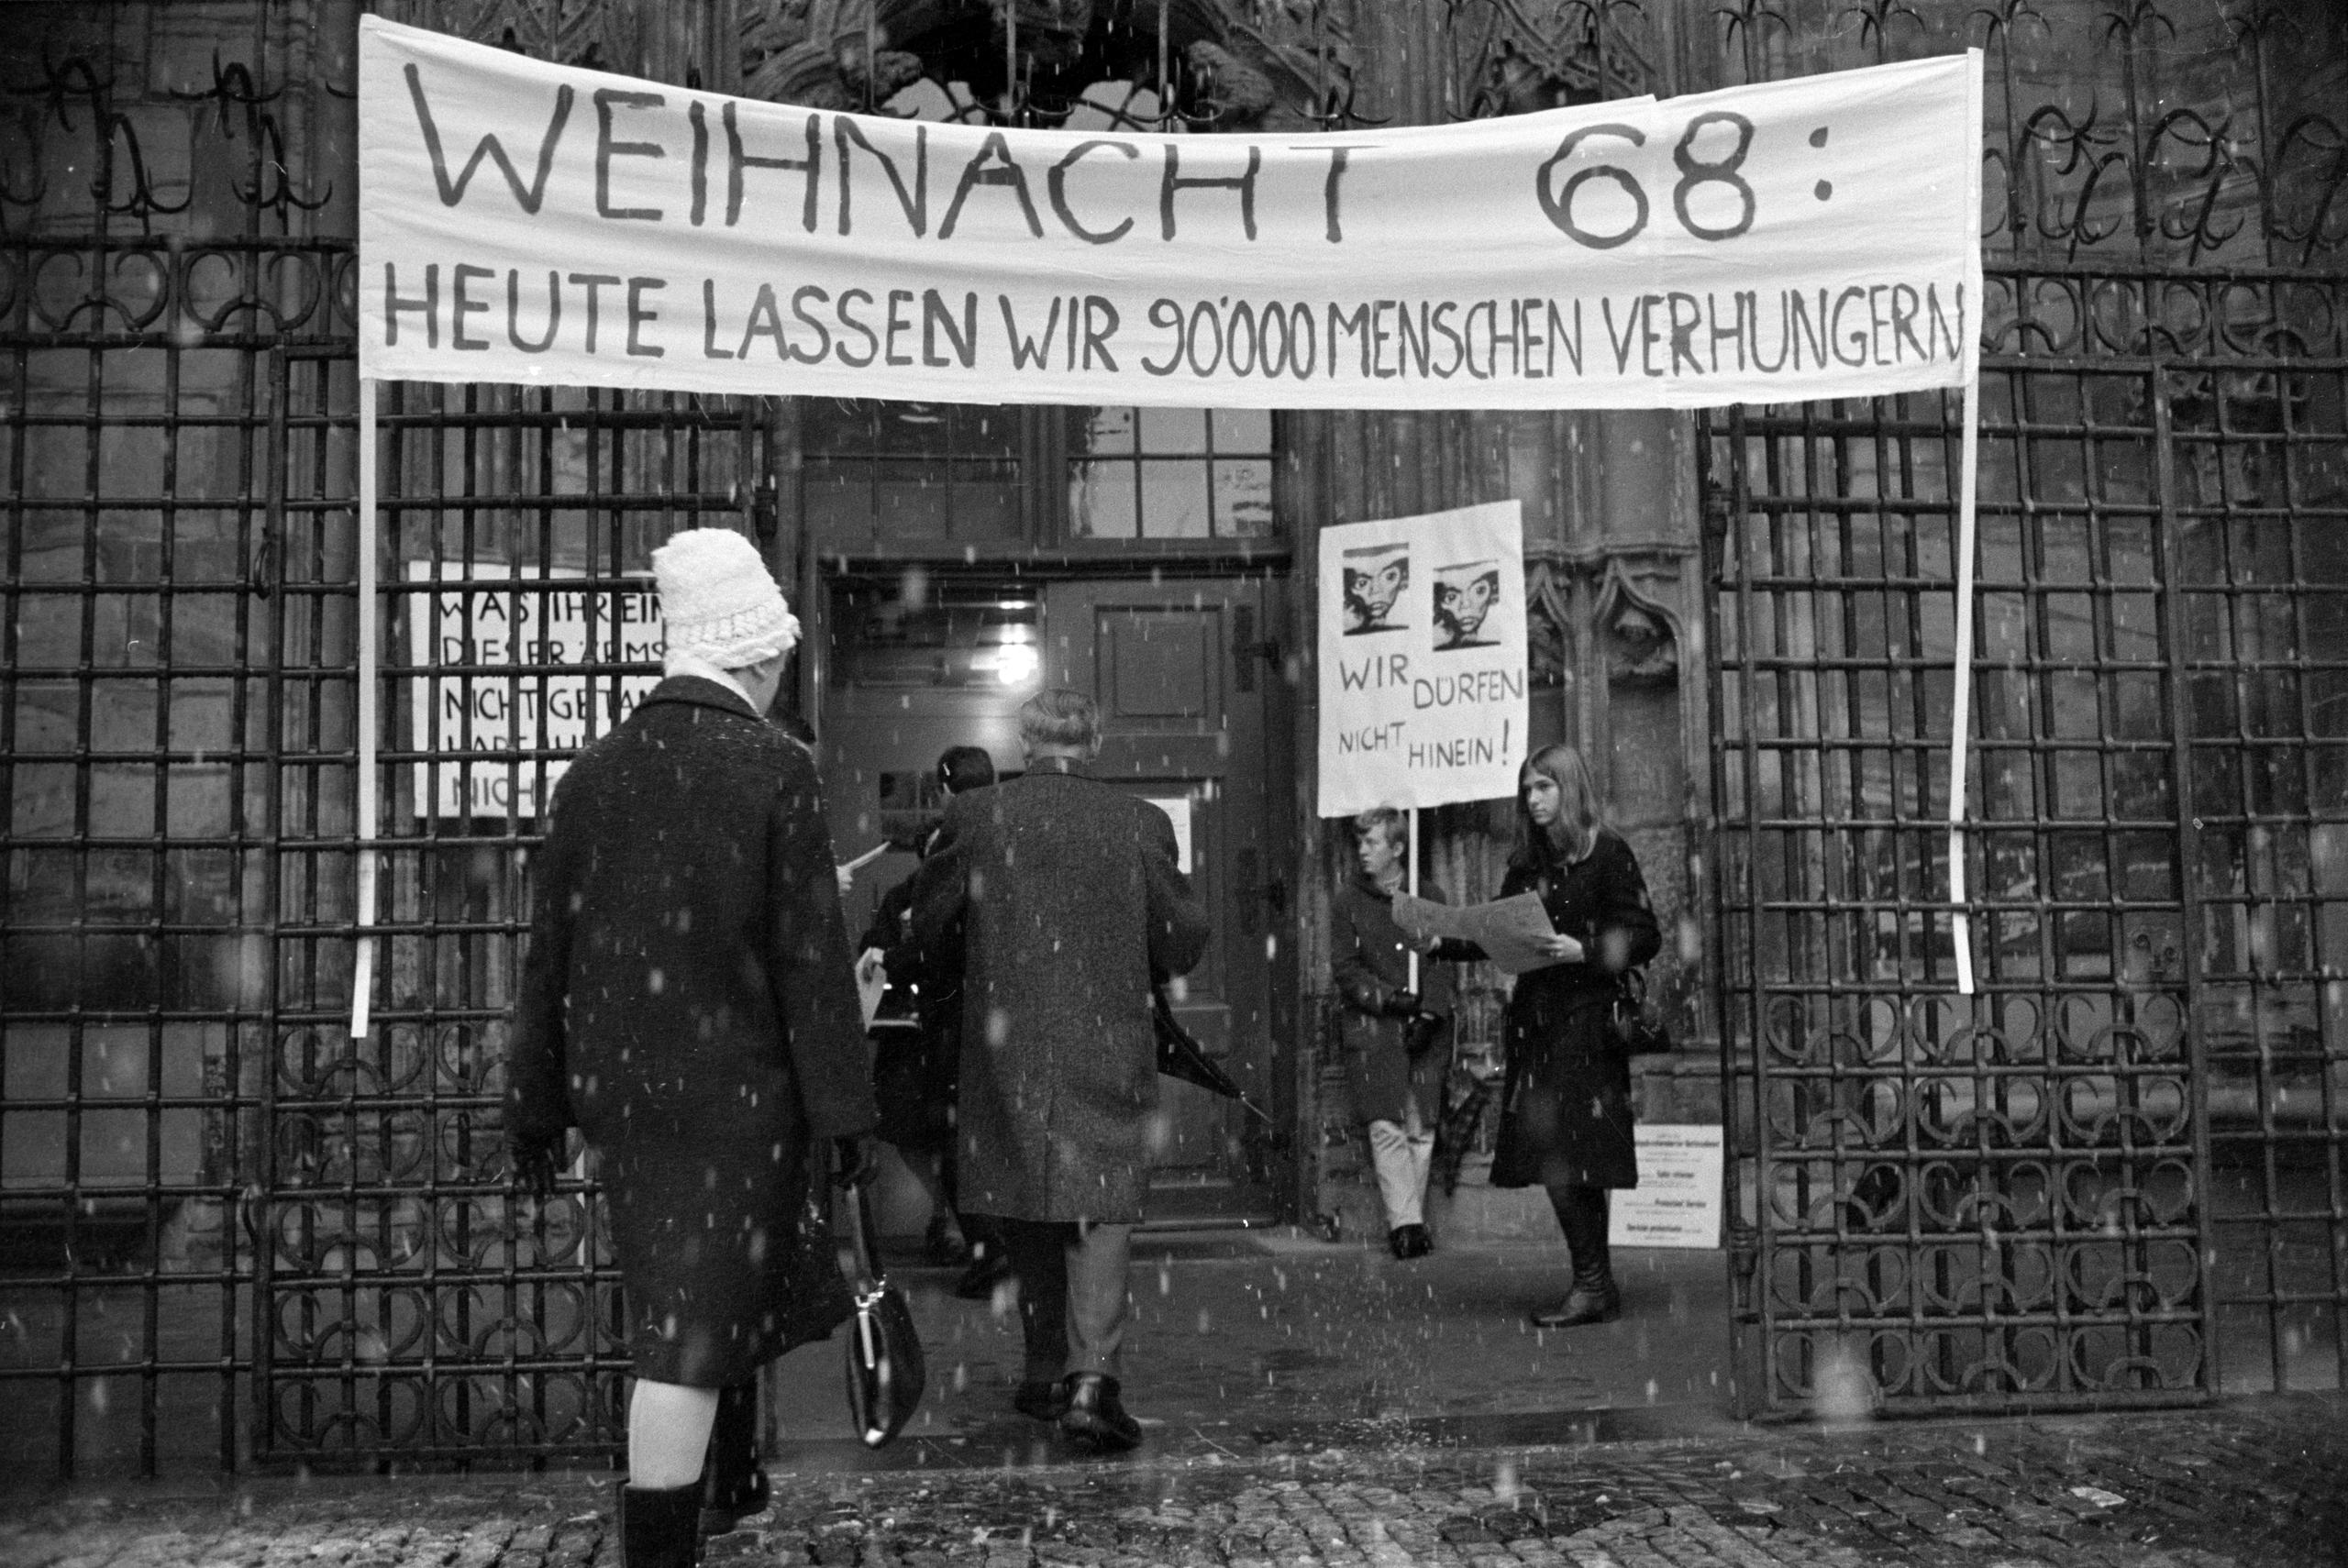 Pancartas sobre el hambre en el mundo, Berna, 1968.